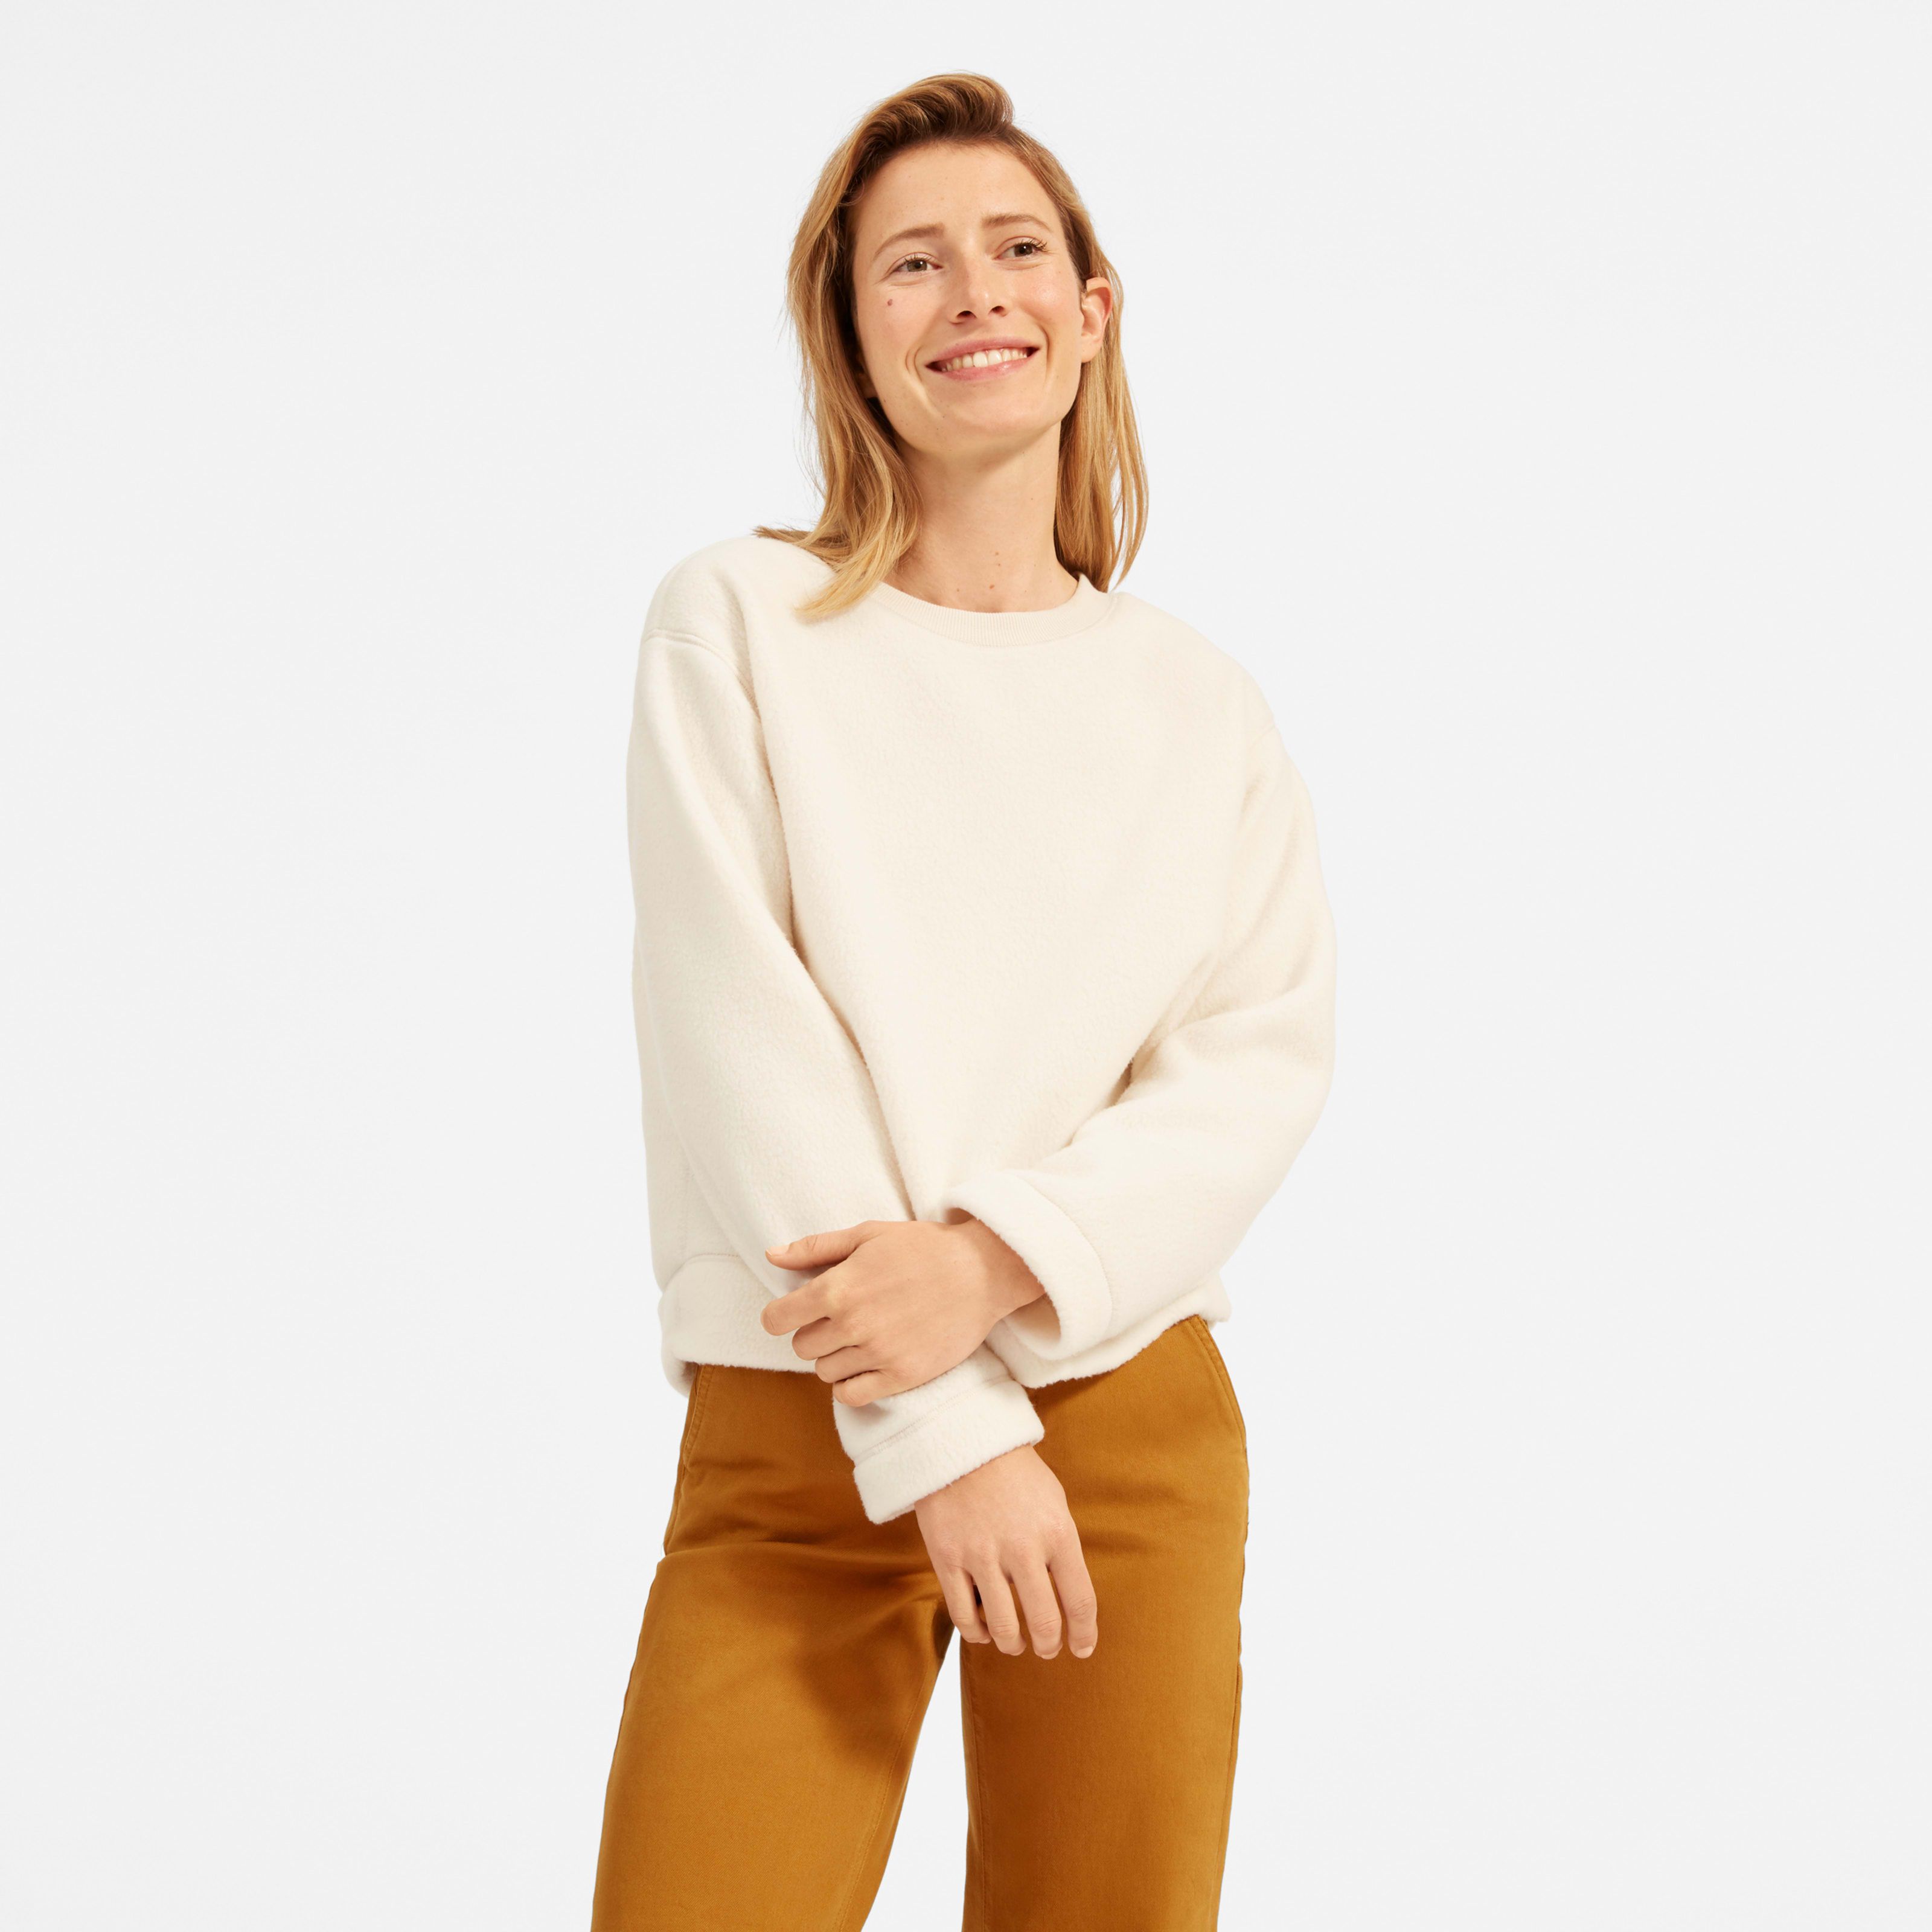 Women's ReNew Plush Fleece Sweatshirt by Everlane in Bone, Size XL | Everlane